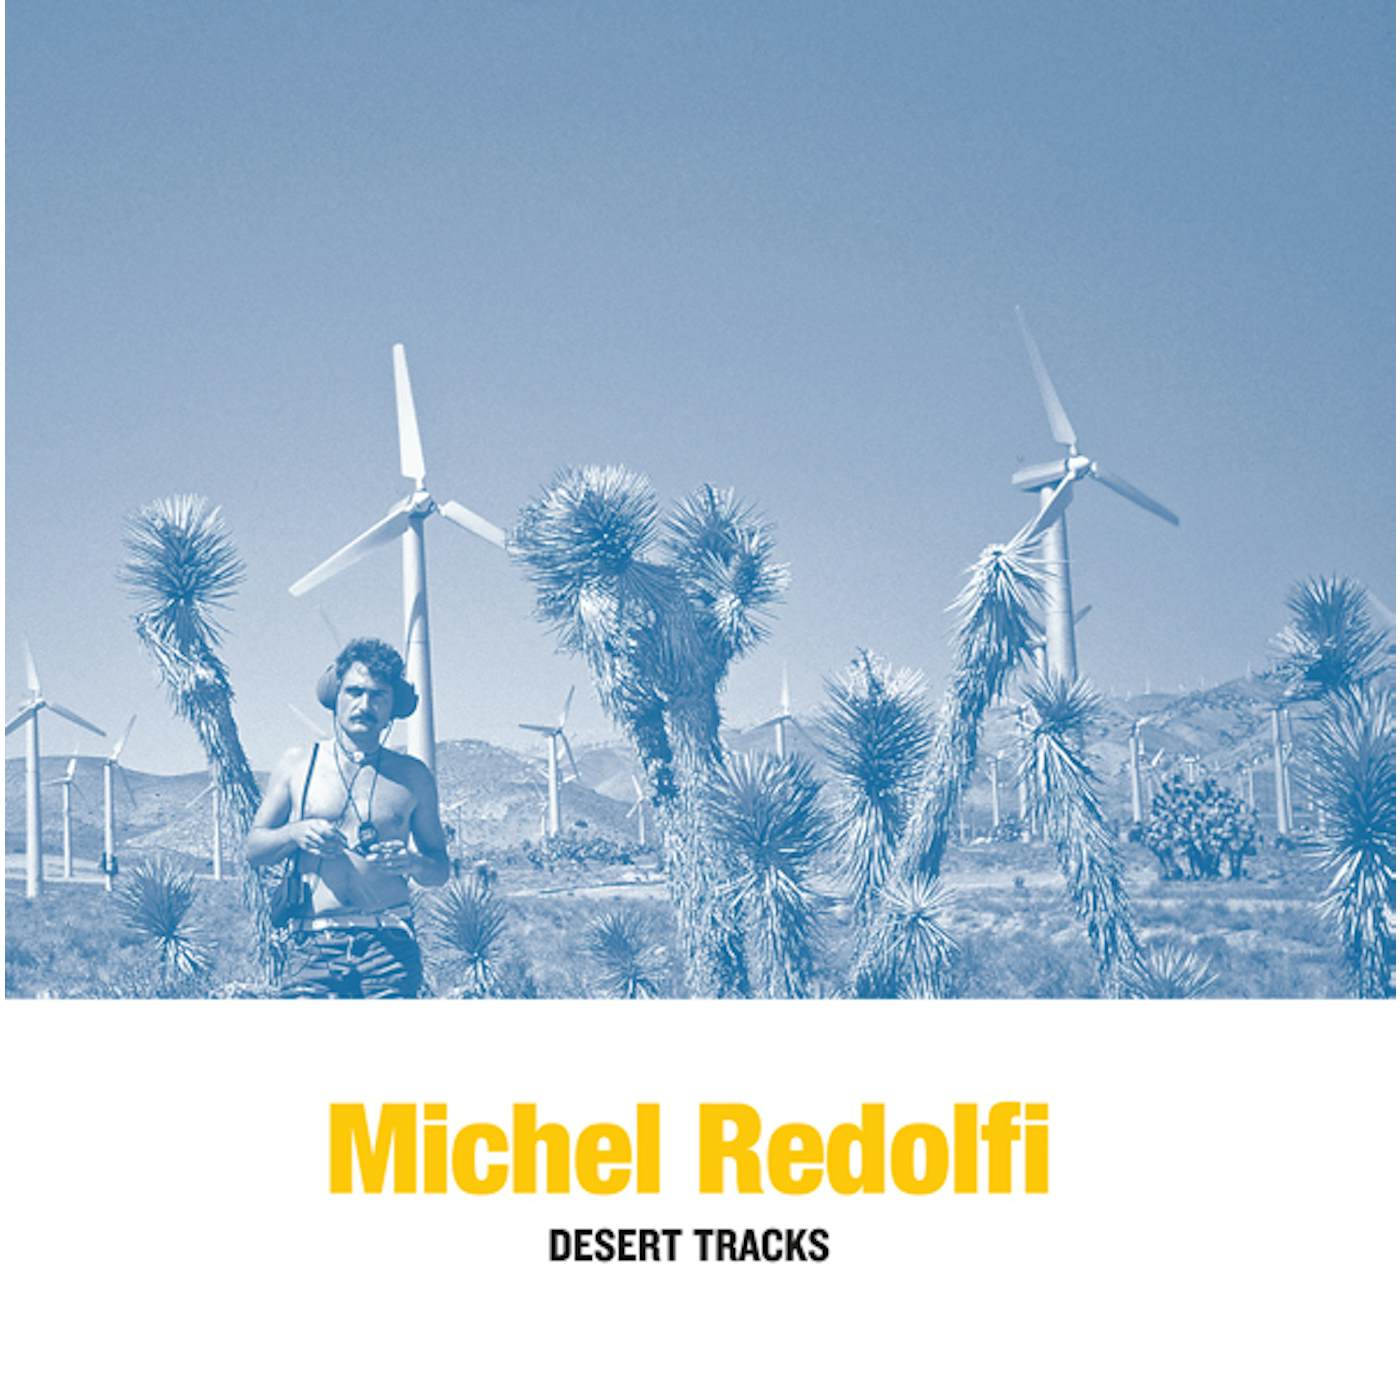 Michel Redolfi Desert Tracks Vinyl Record